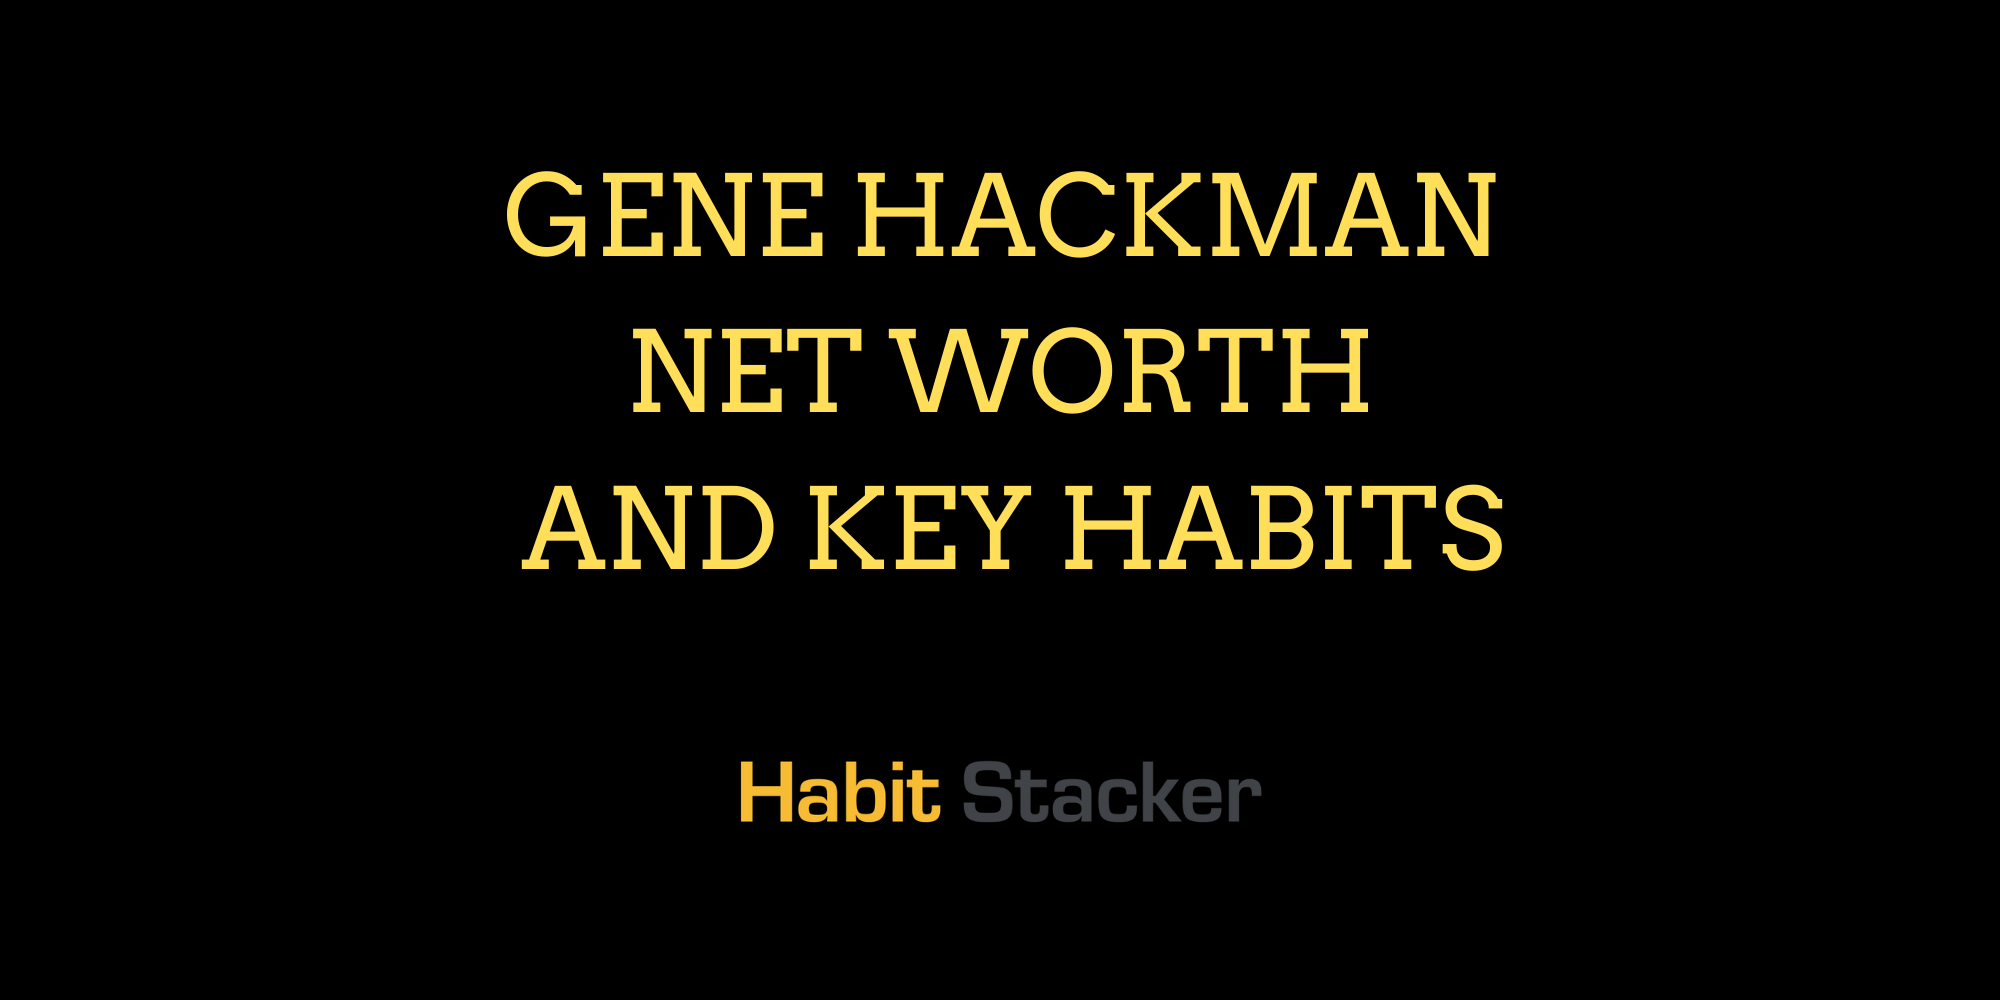 Gene Hackman Net Worth and Key Habits